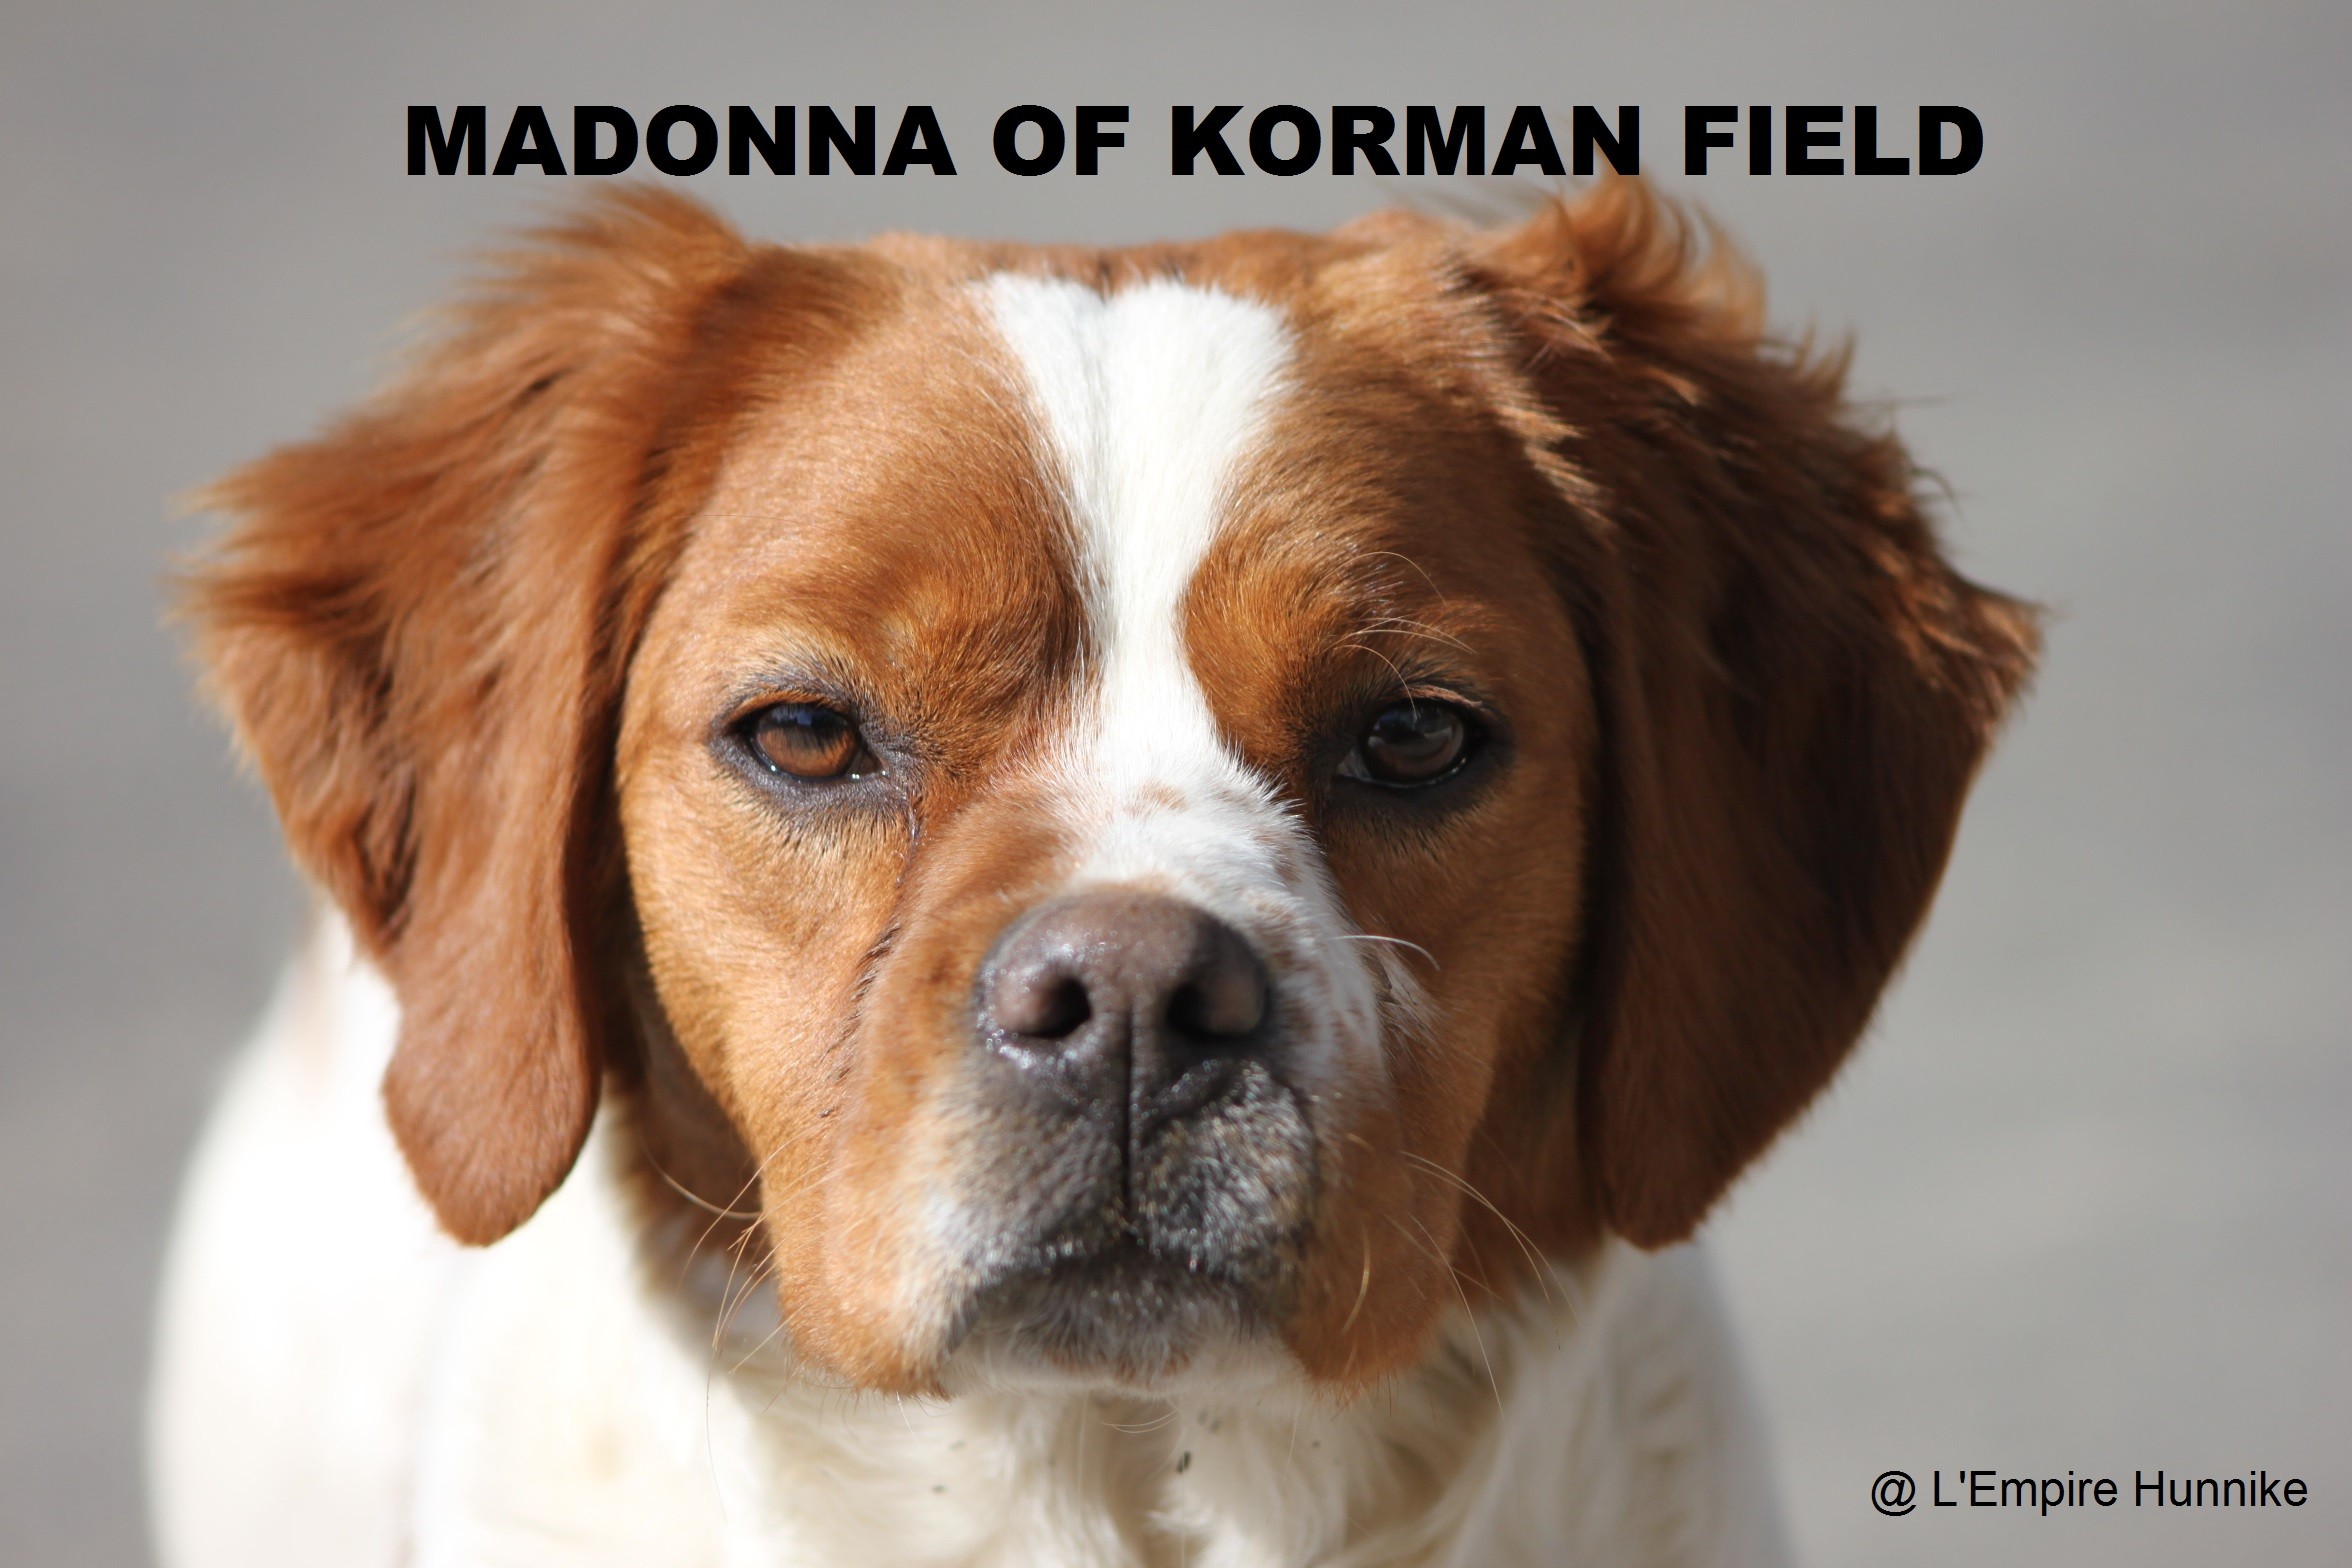 Madona of korman field